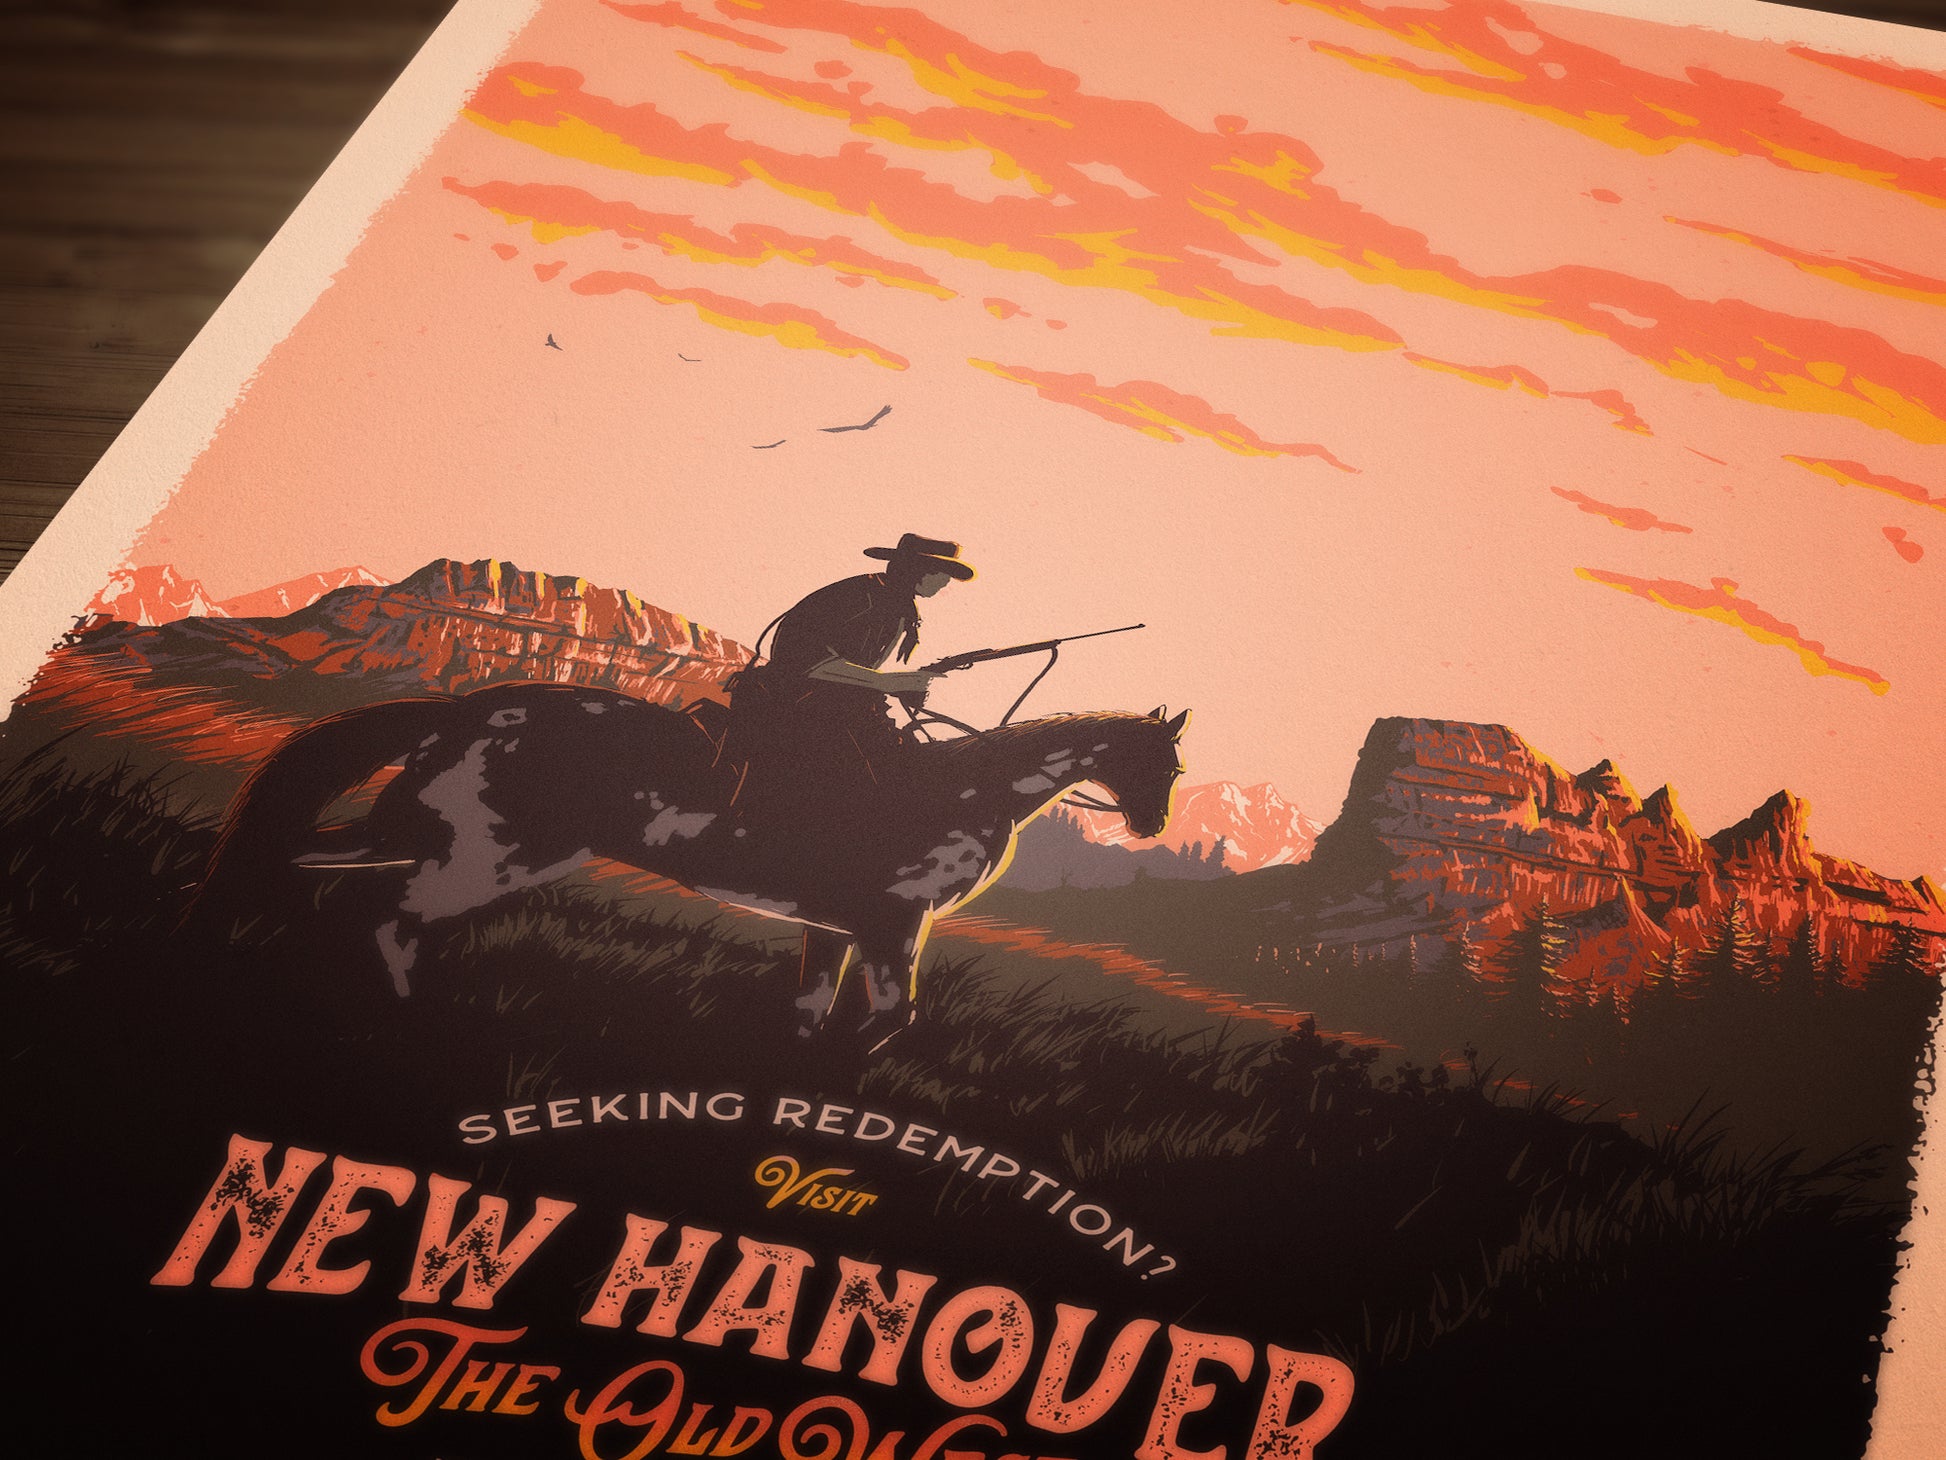 Red Dead Redemption Arthur Morgan Wild West Cowboy Poster 